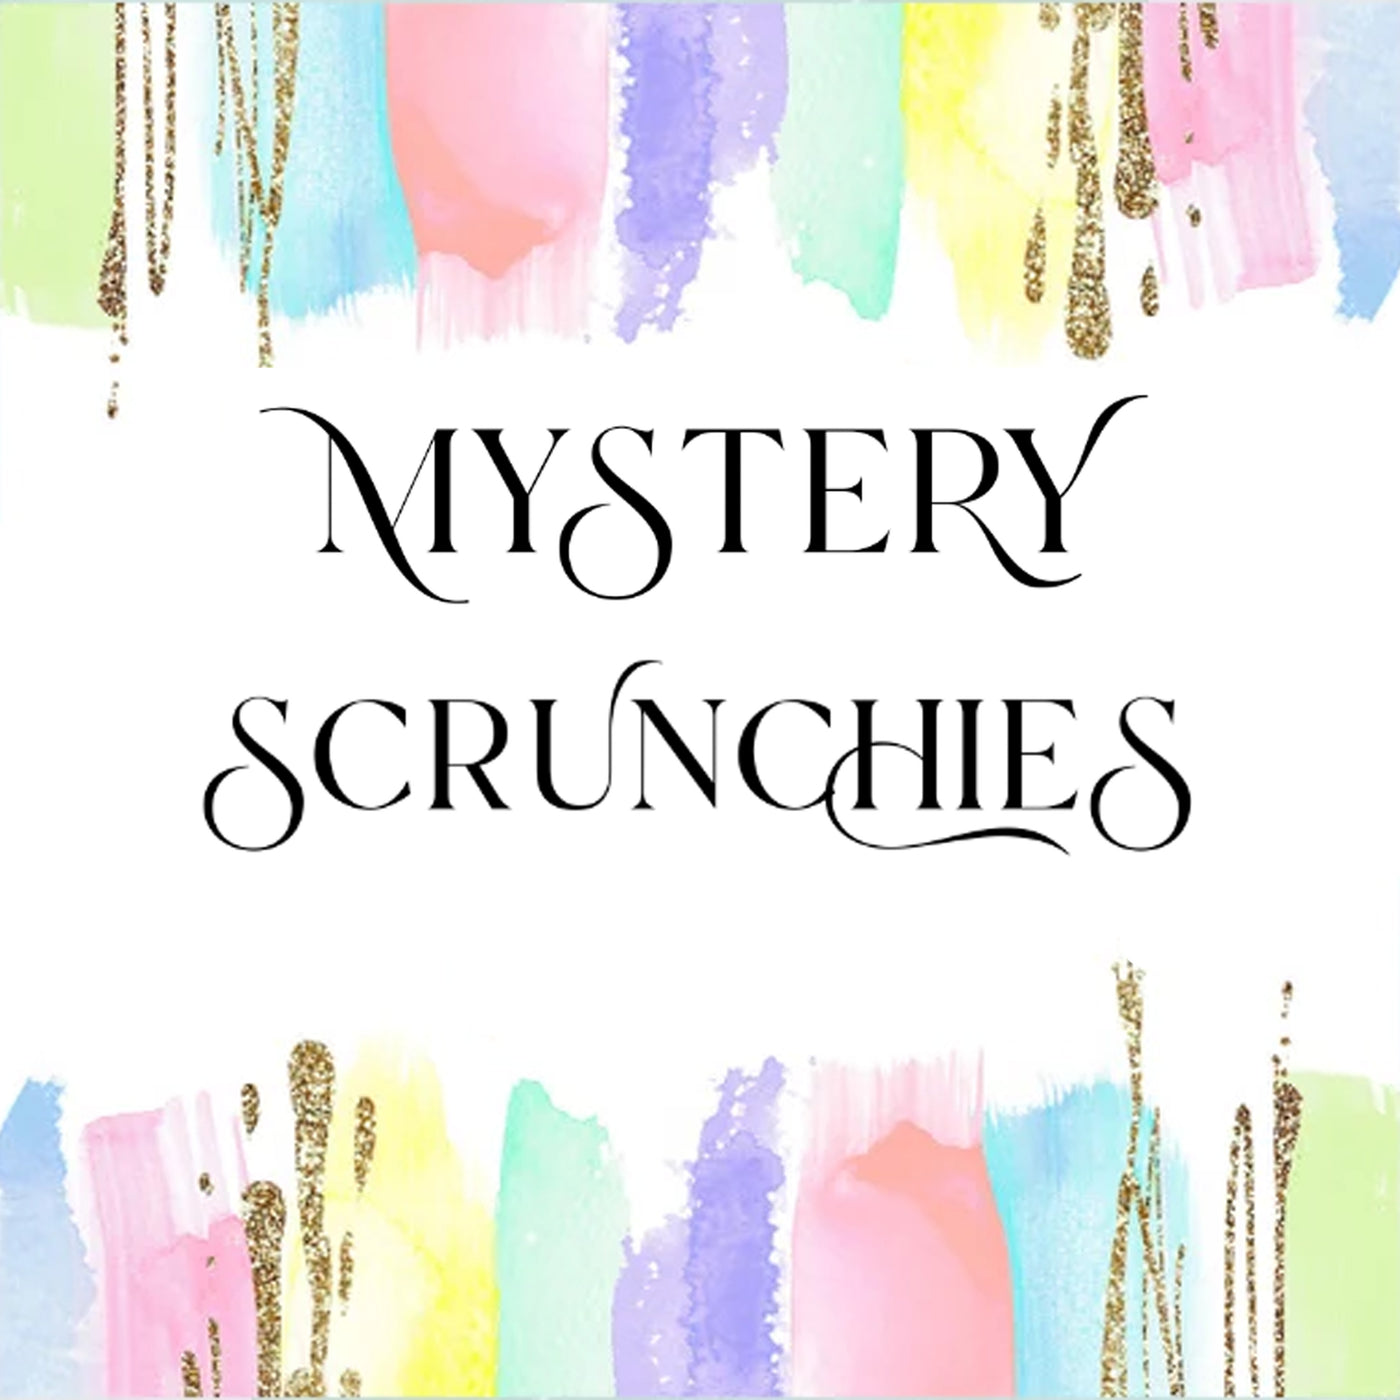 5 Mystery Scrunchies